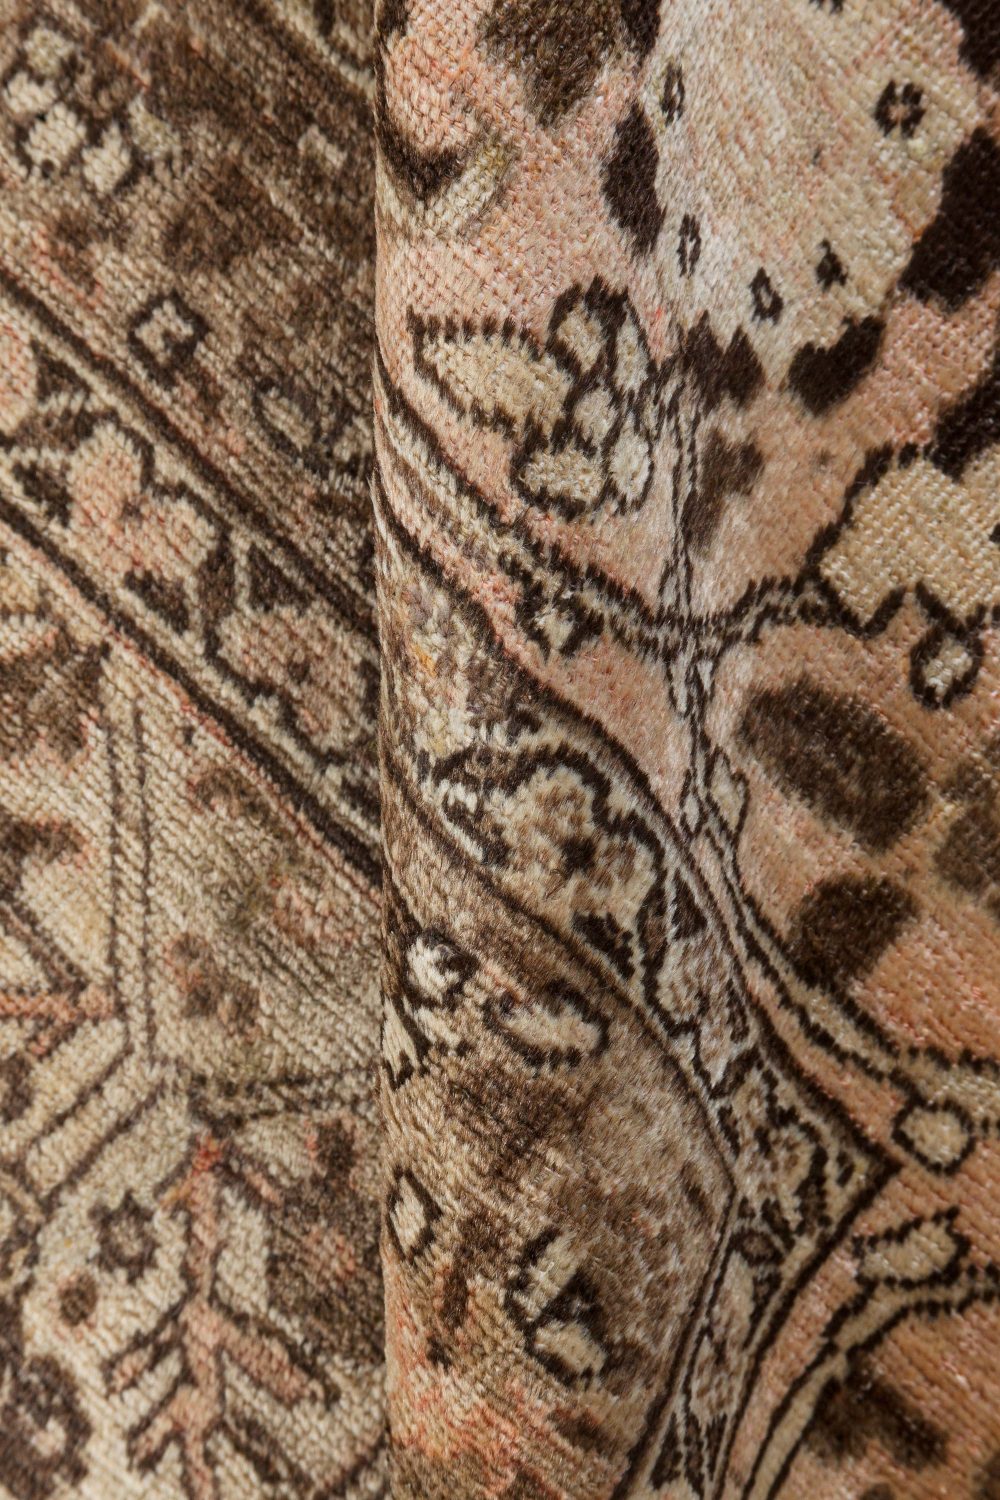 Authentic 1900s Persian Tabriz Handmade Wool Carpet BB7282